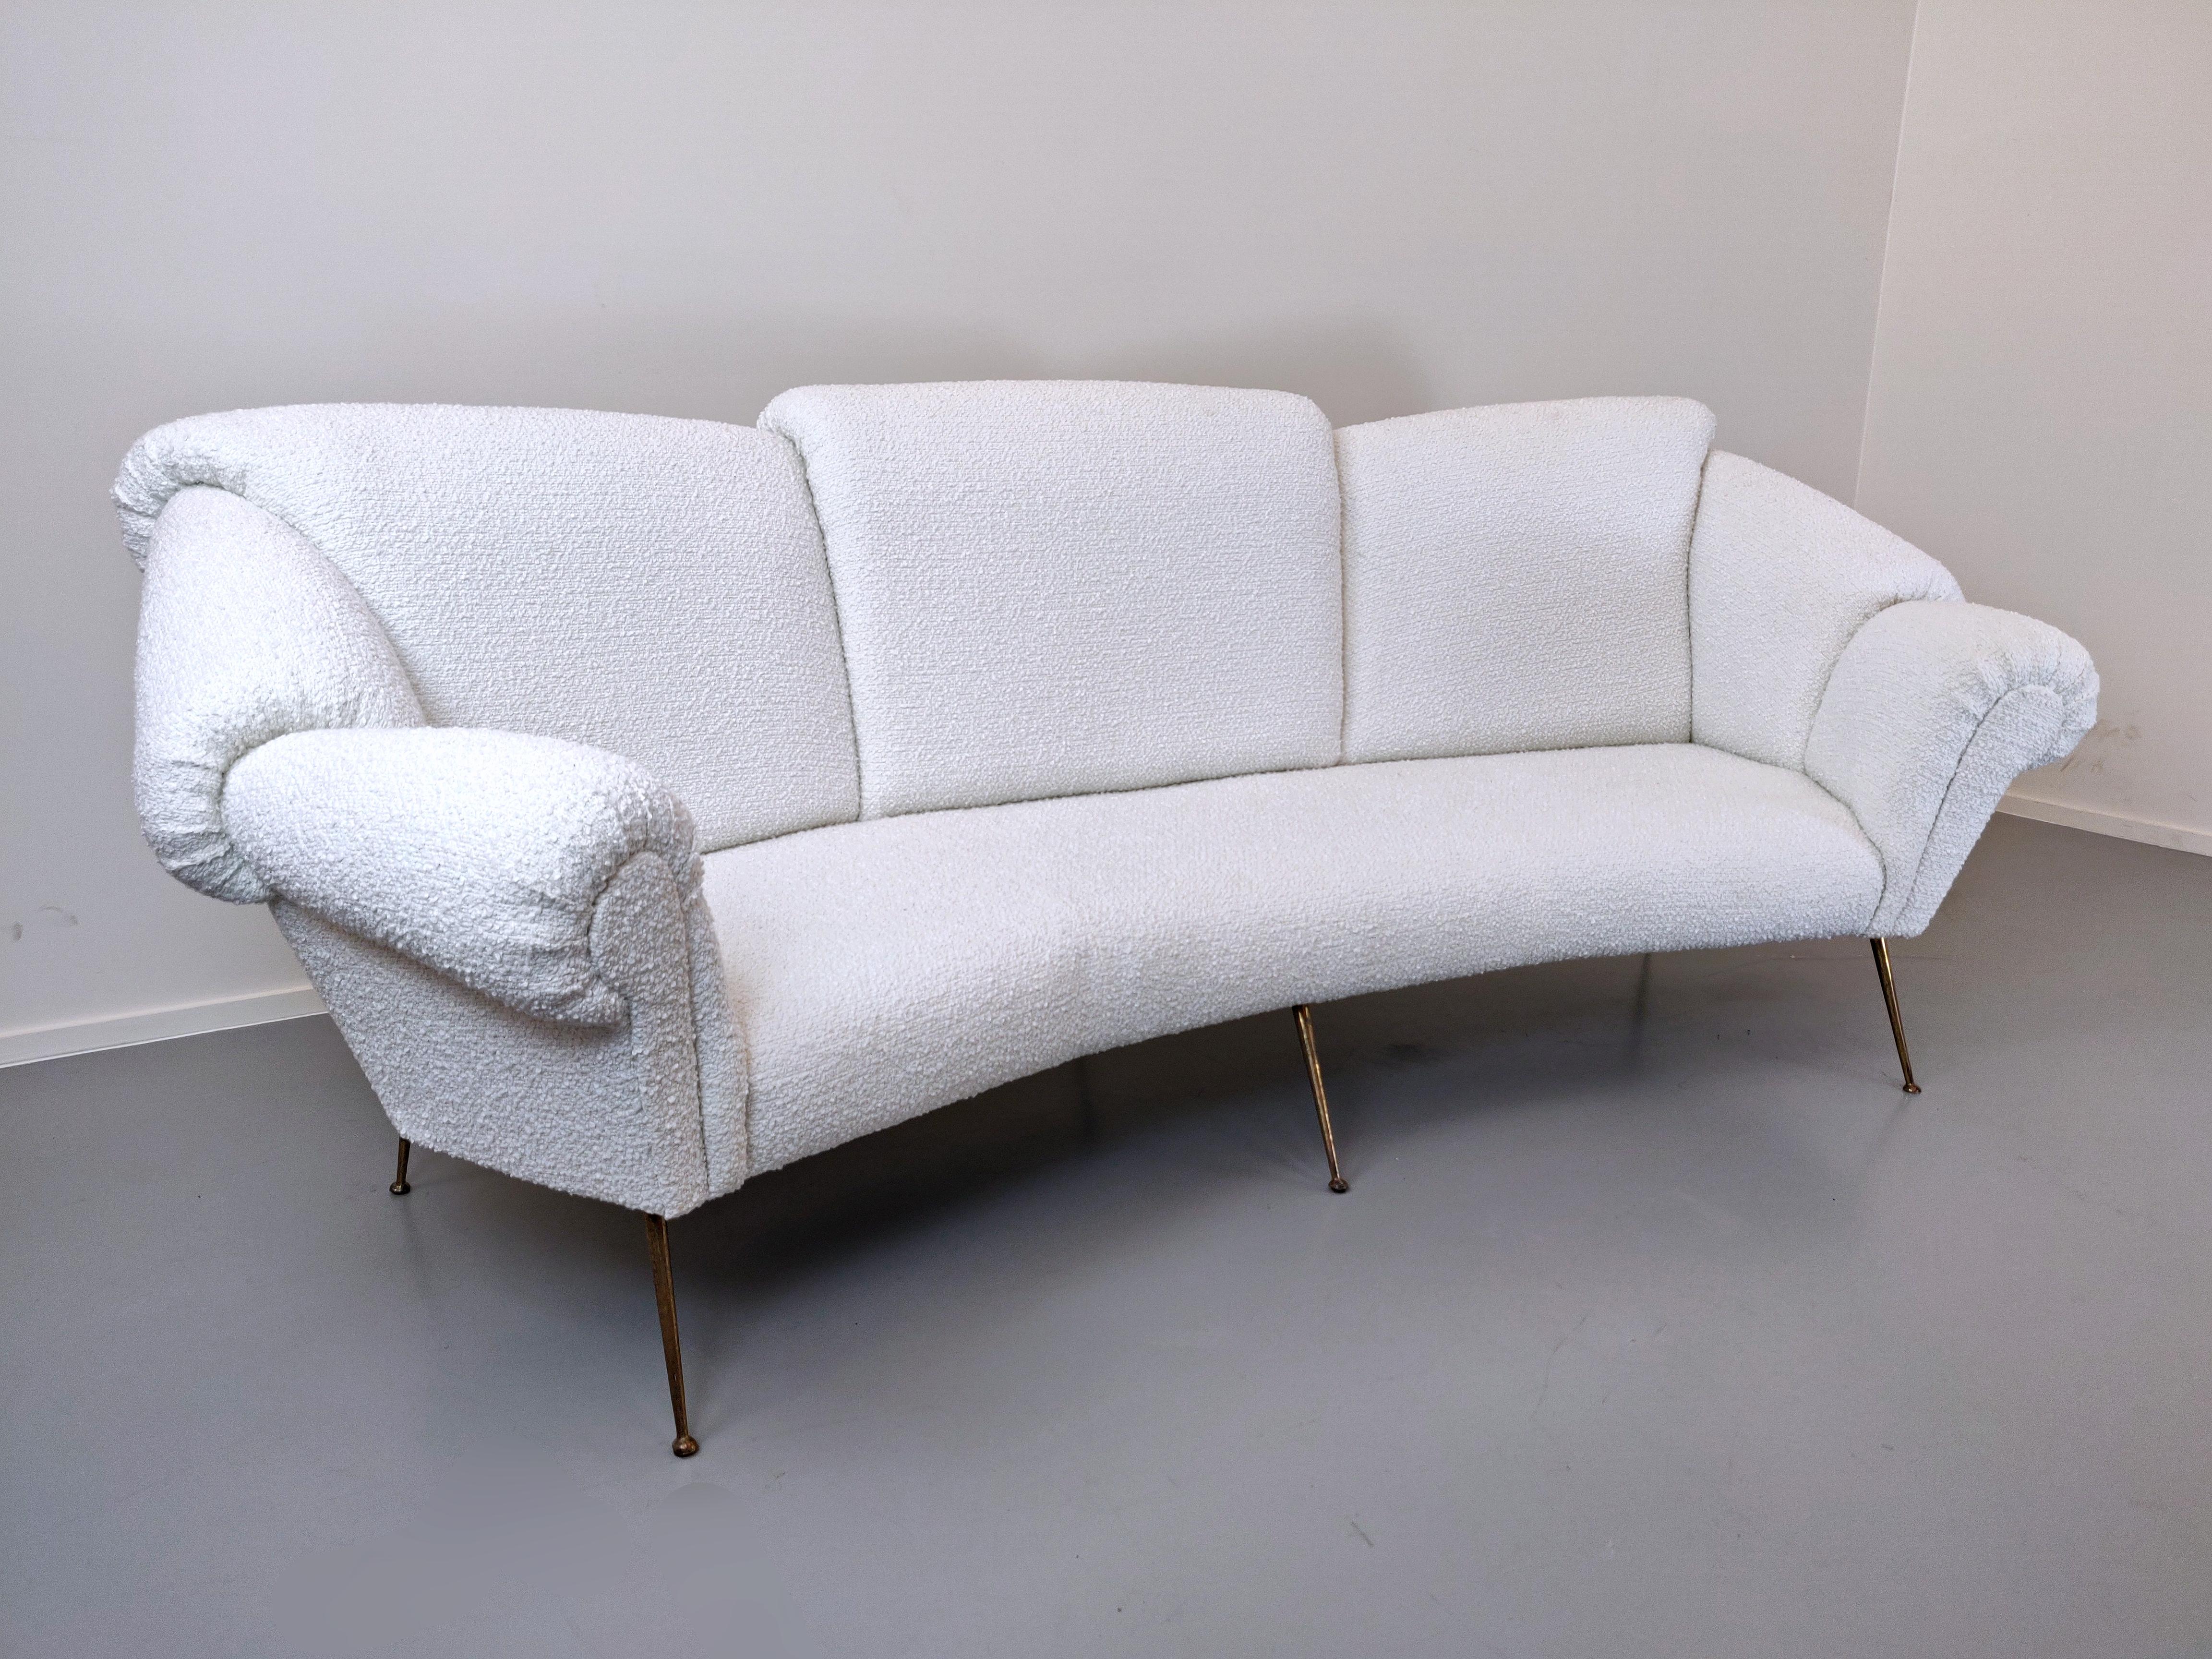 Mid-20th Century Italian Mid-Century Modern Sofa Attributed to Giacomo Balla, 1950s